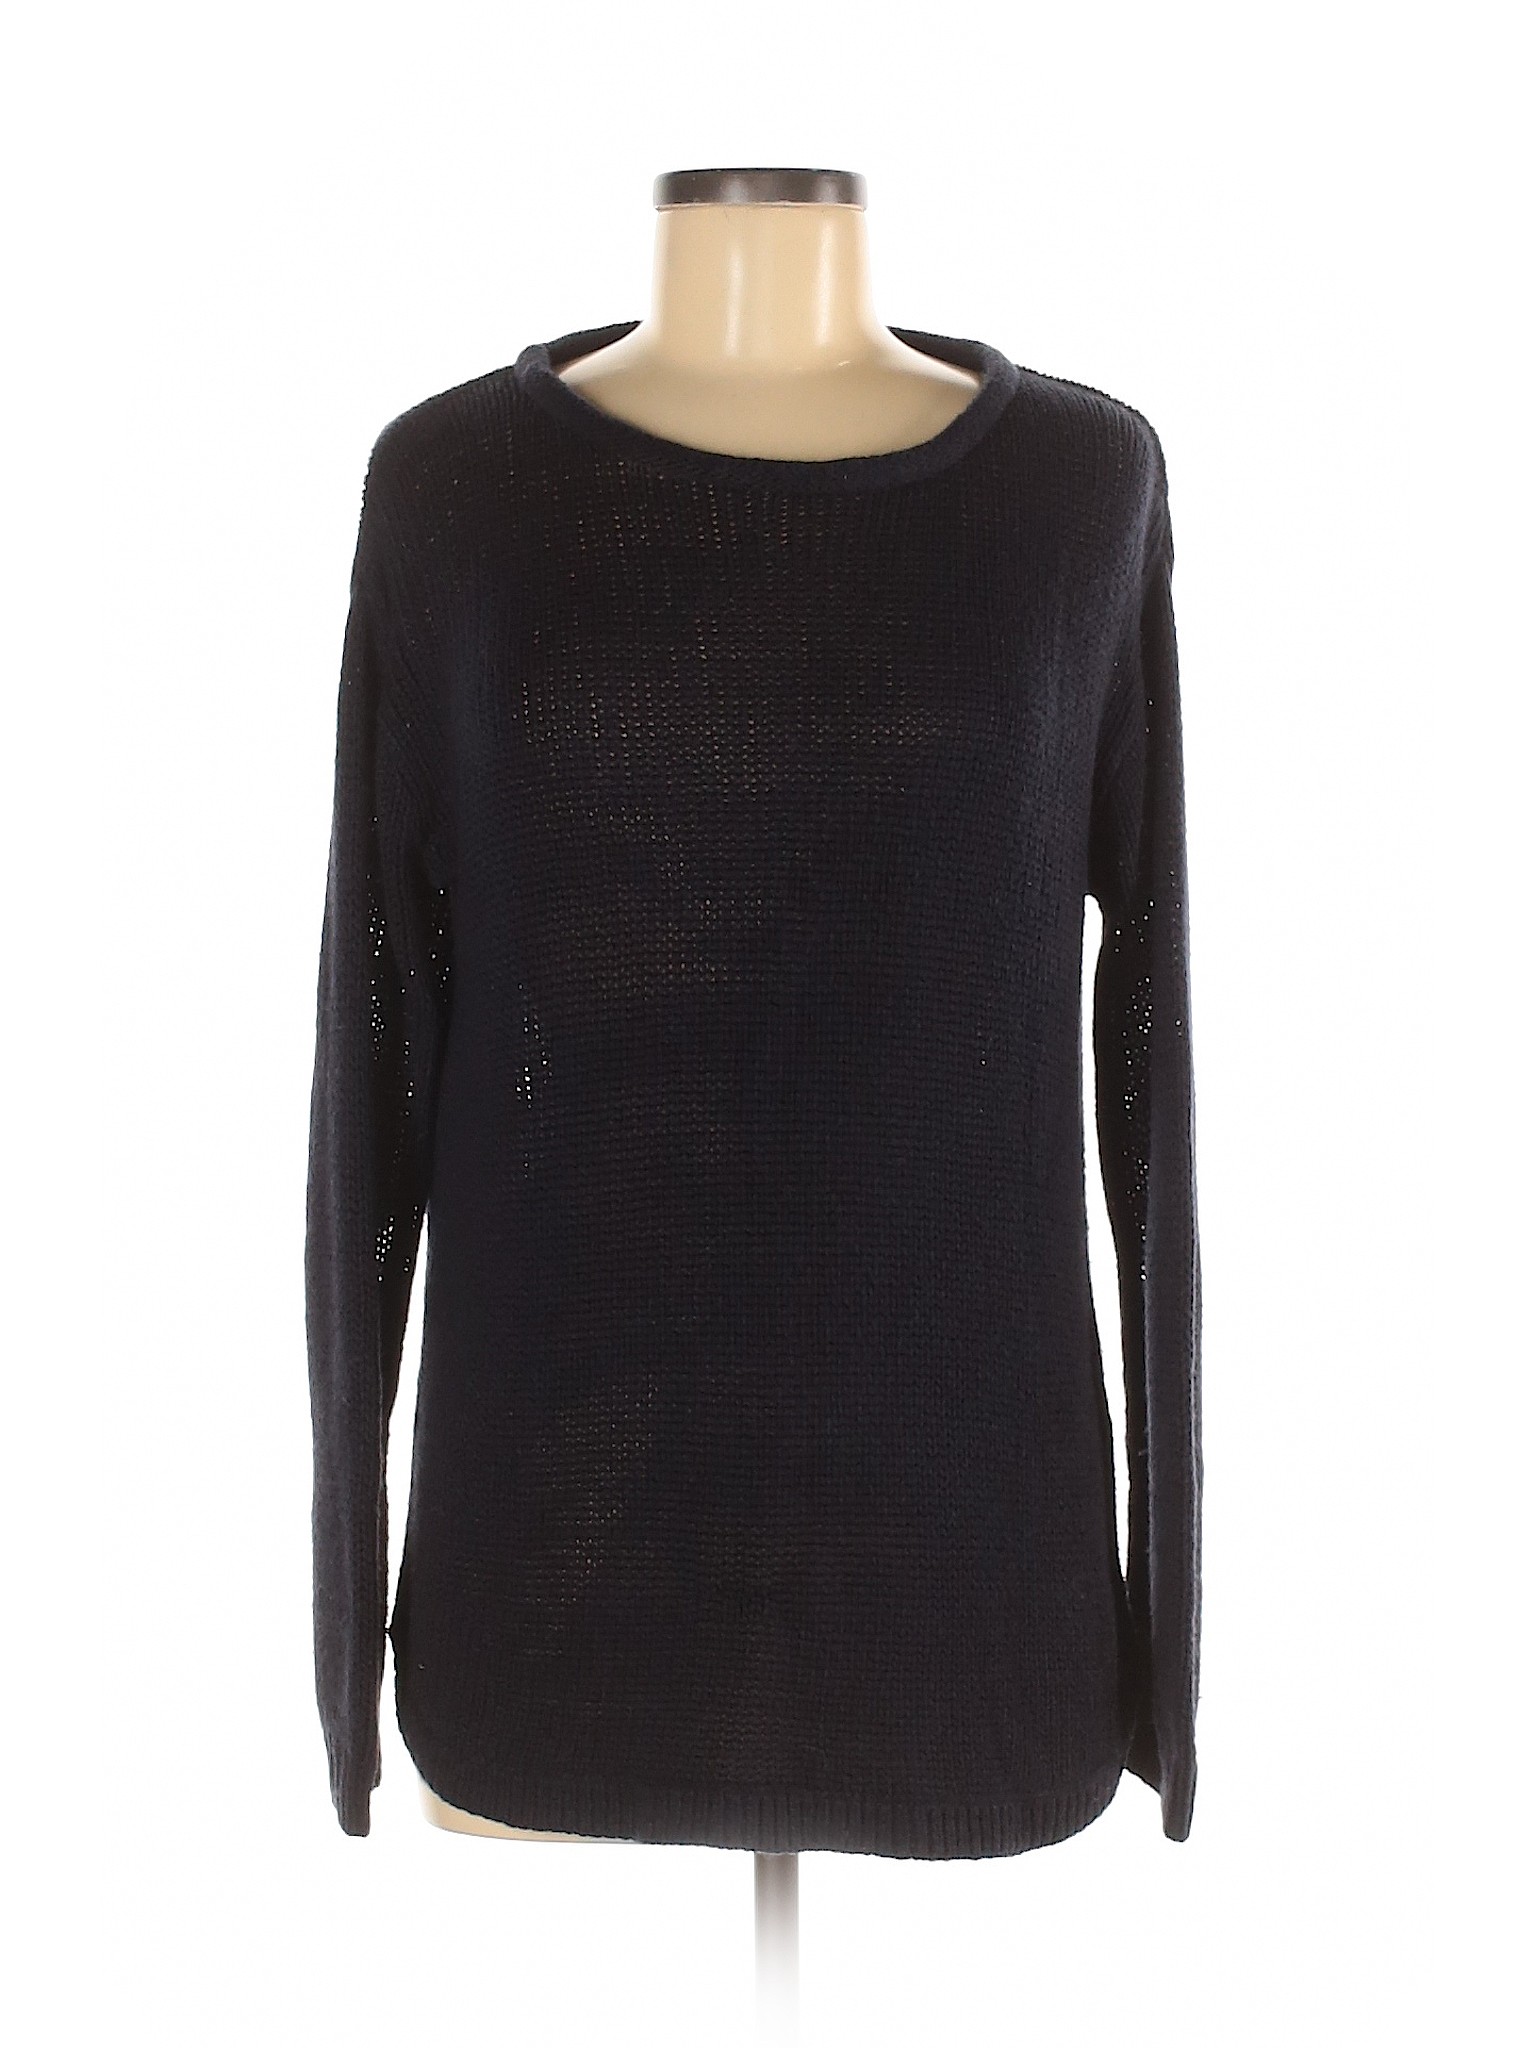 H&M Women Black Pullover Sweater M | eBay